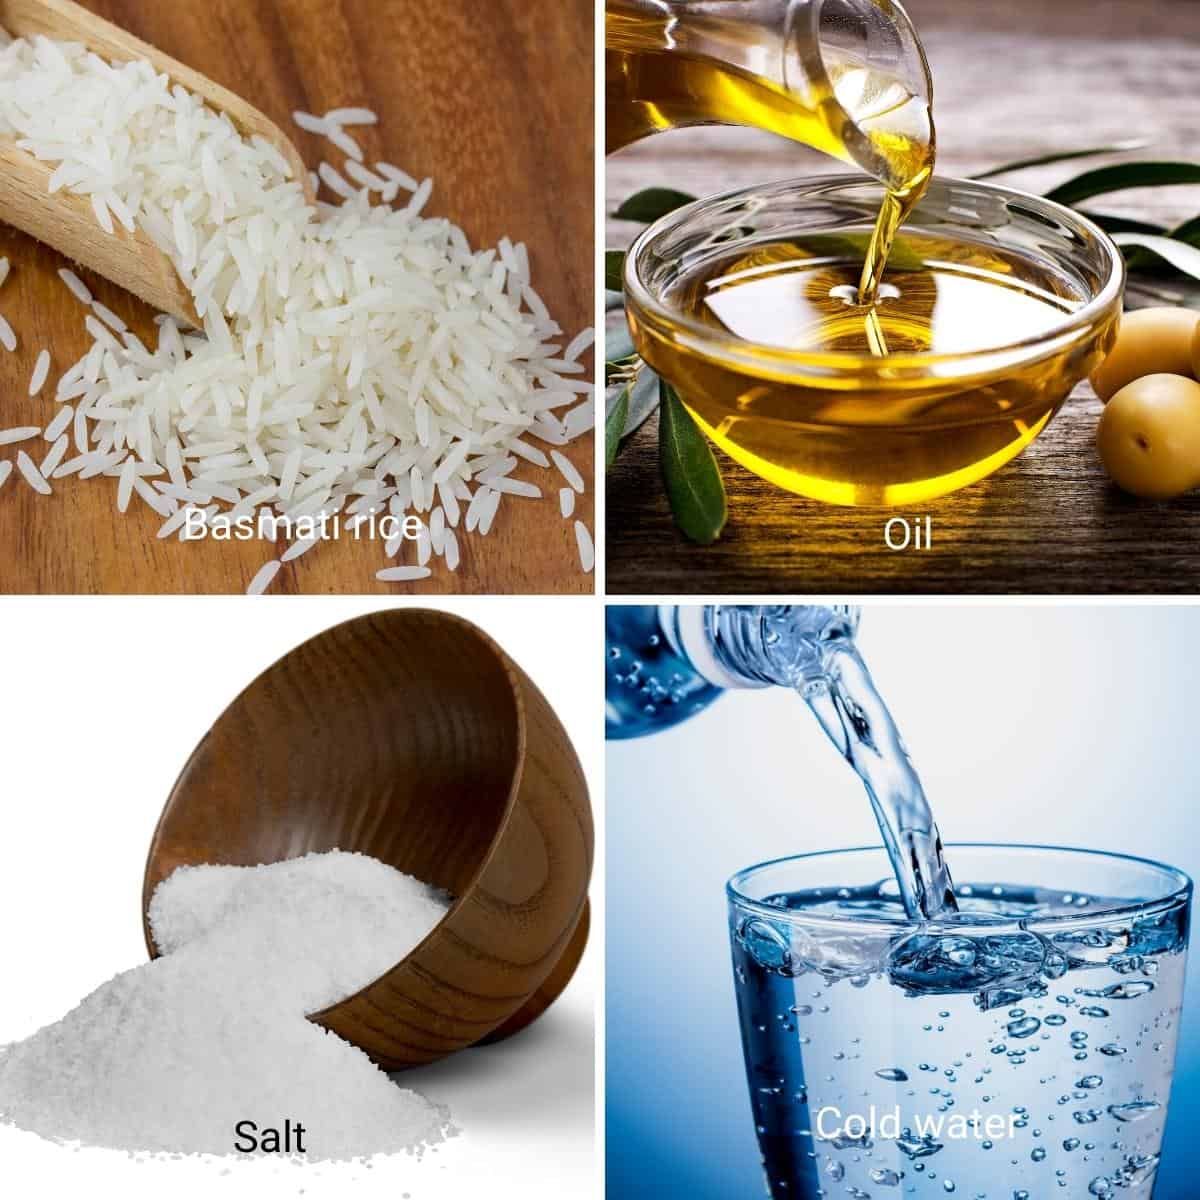 Ingredients for cooking basmati rice.